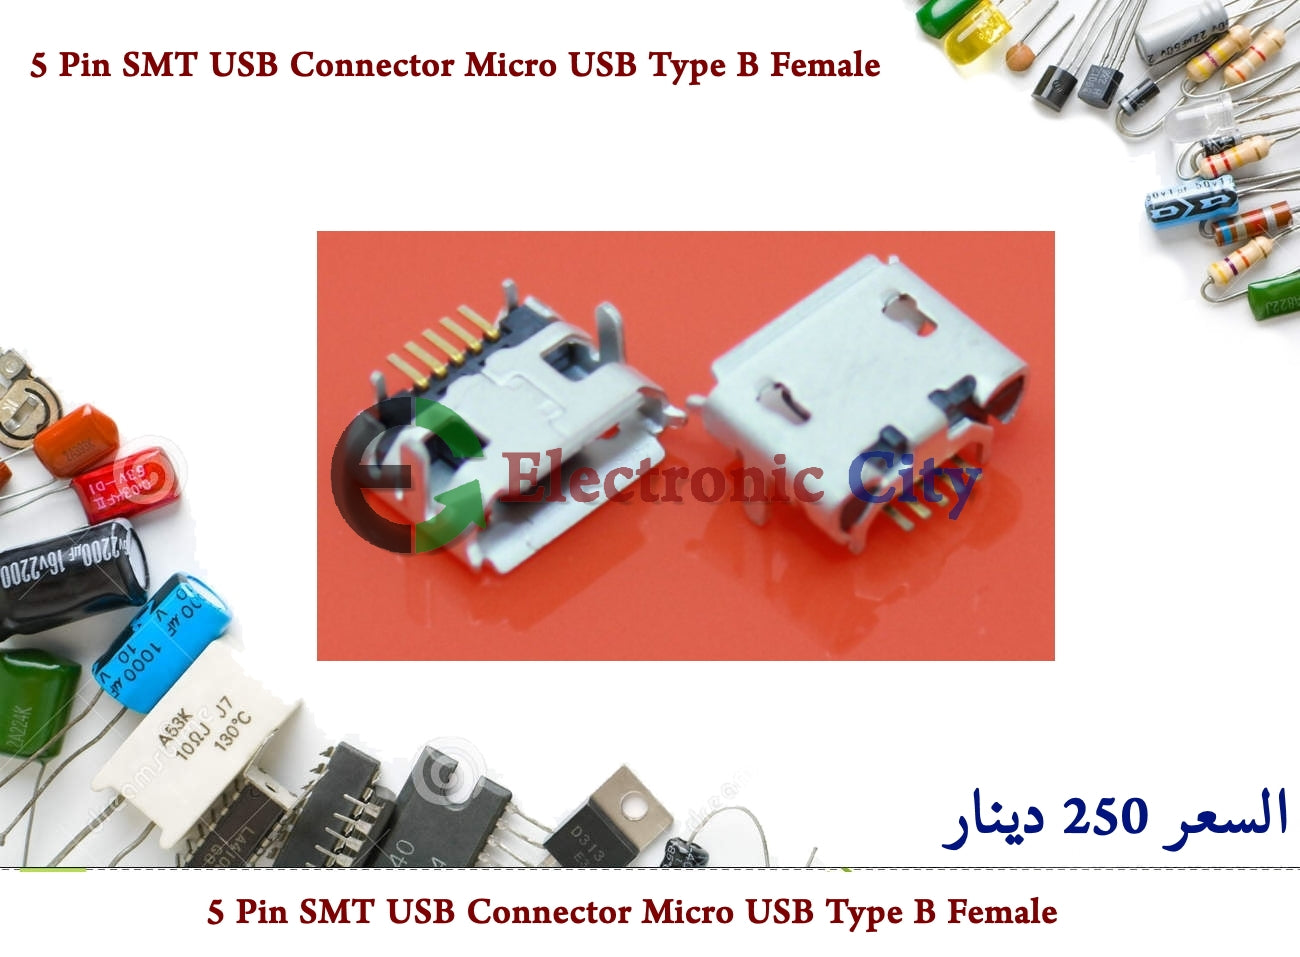 5 Pin SMT USB Connector Micro USB Type B Female